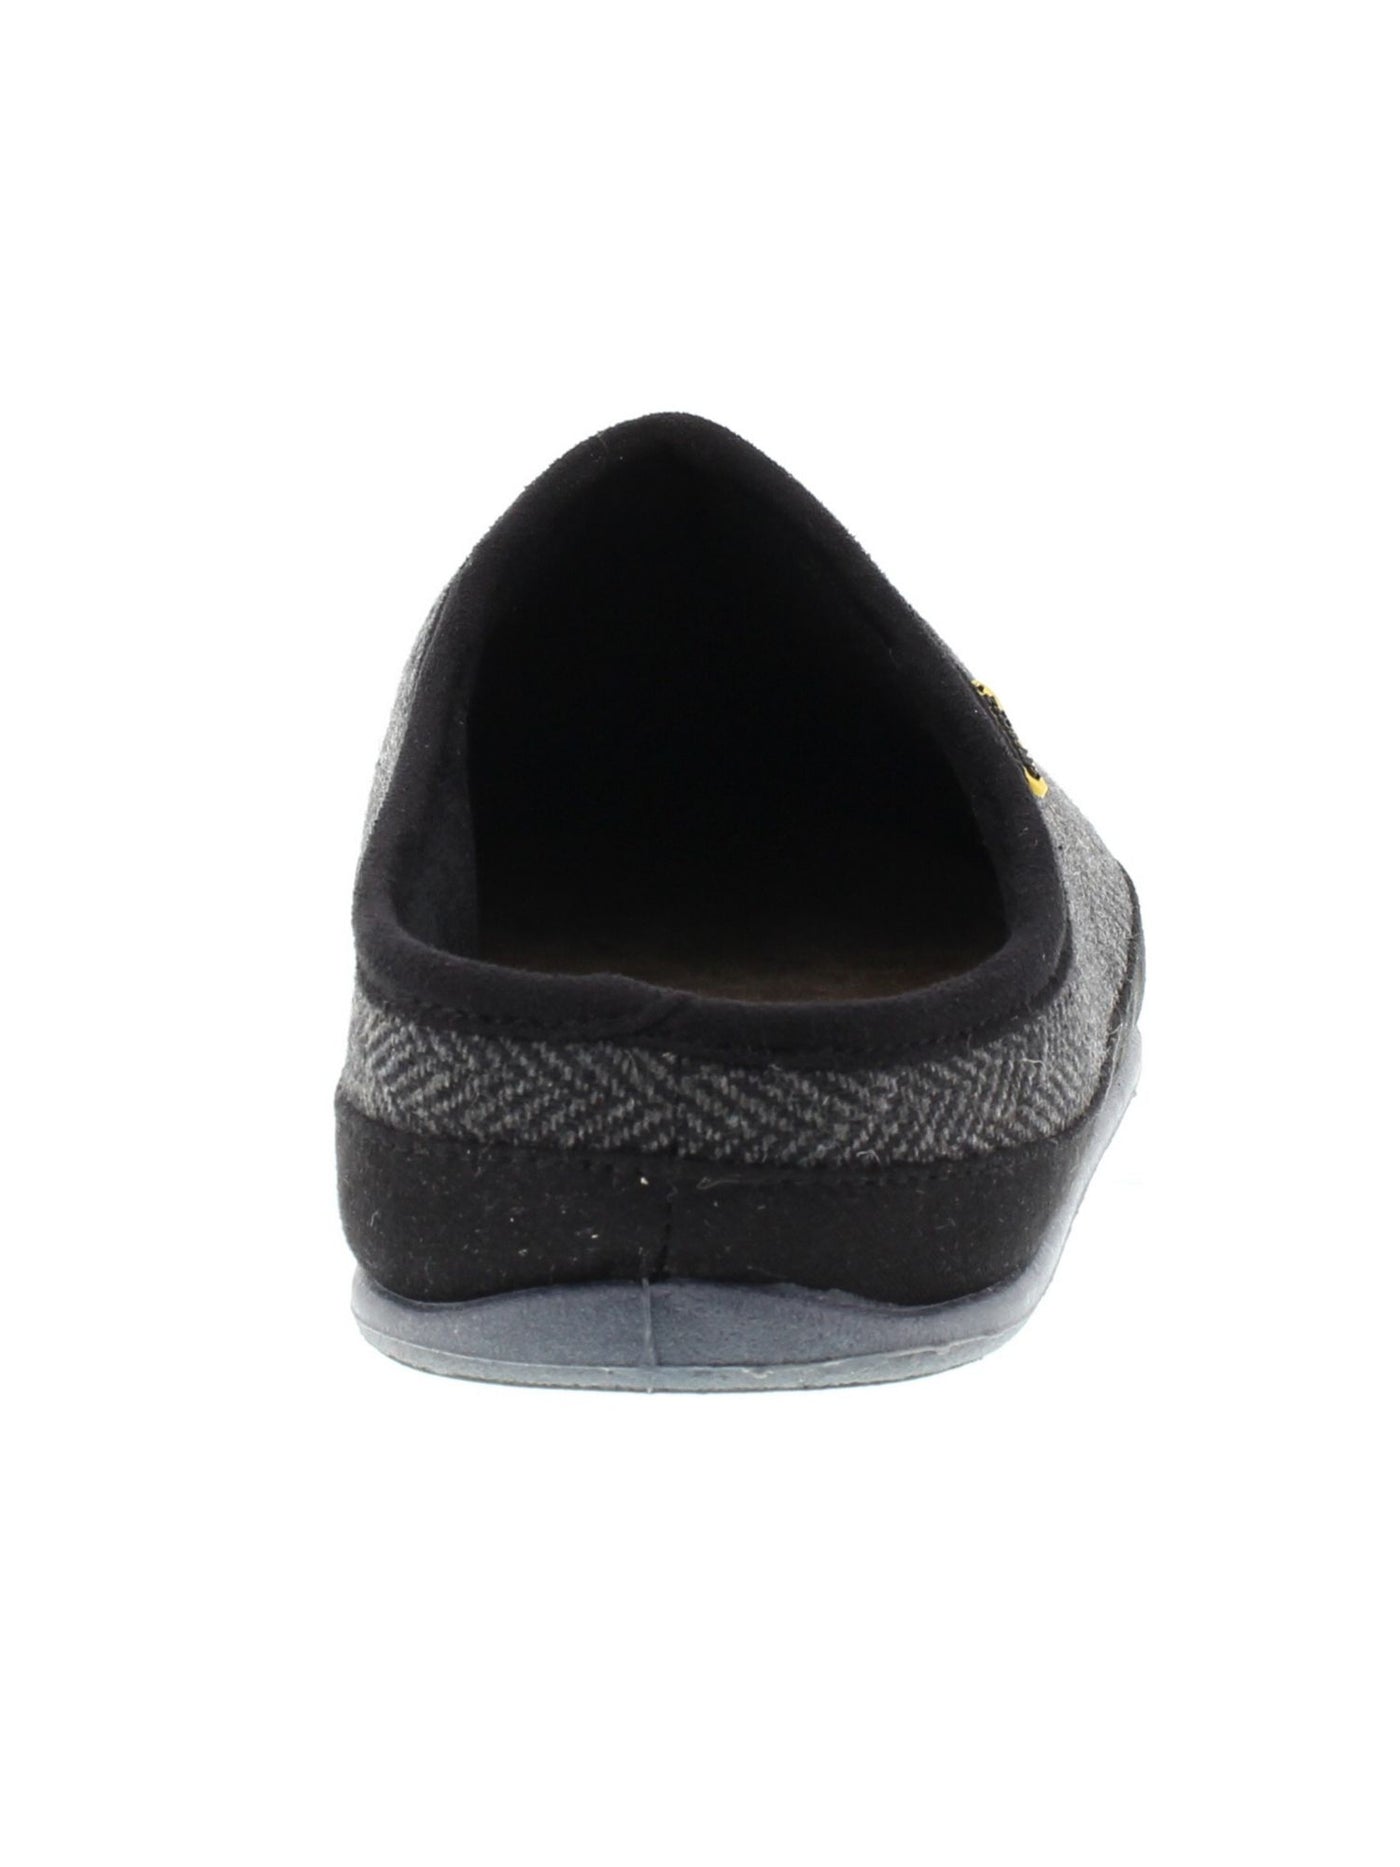 DEER STAGS Mens Gray Herringbone Padded Comfort Wherever Round Toe Platform Slip On Slippers Shoes 8 W